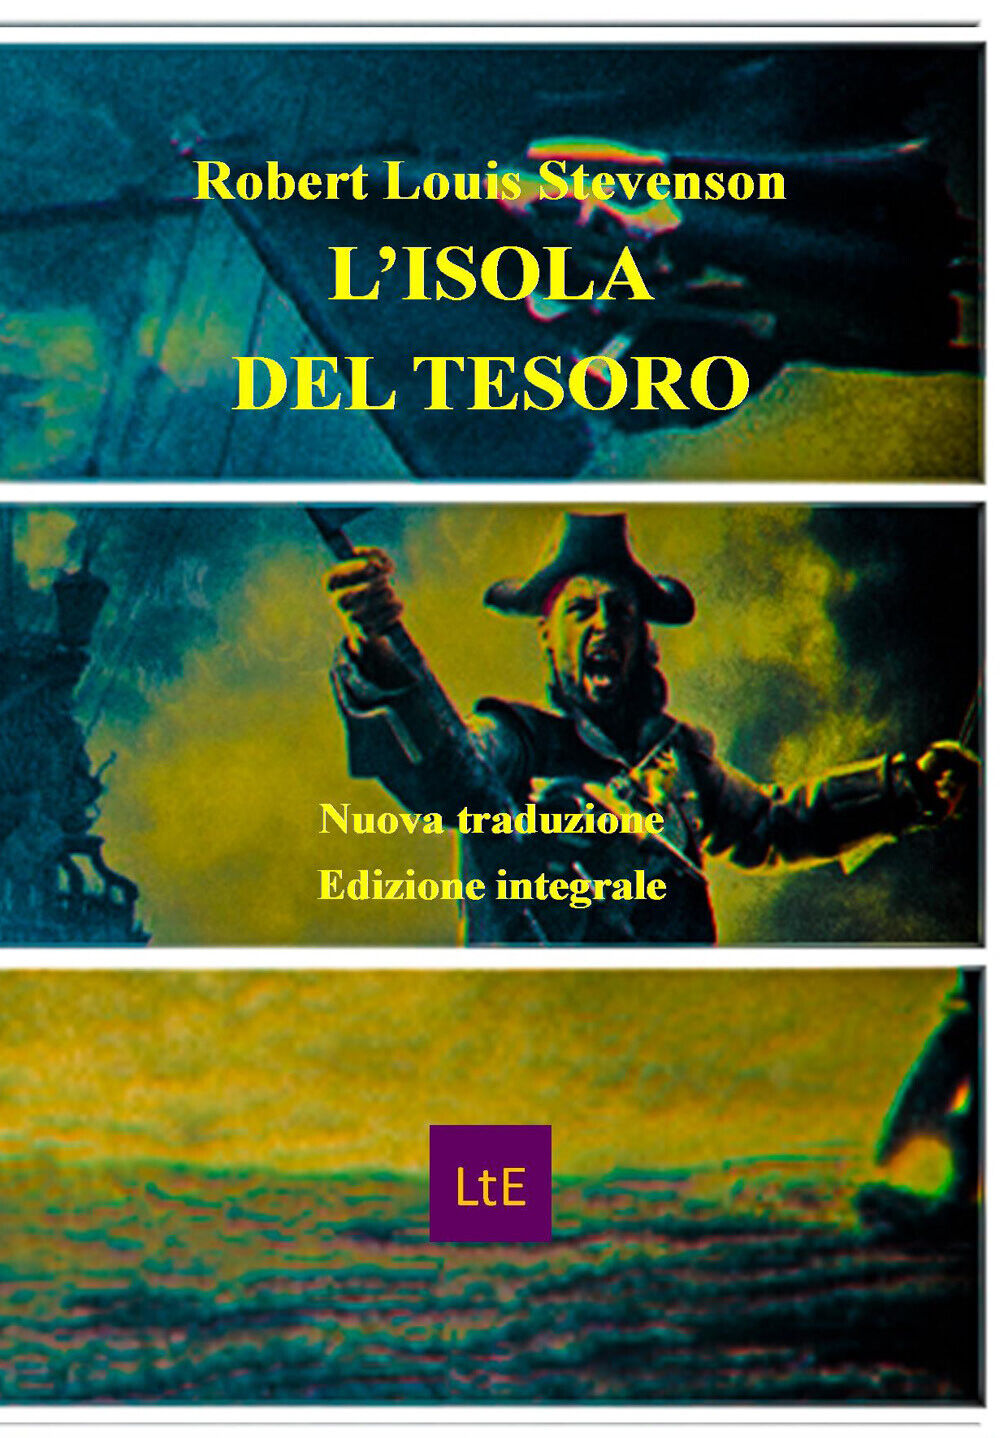   L'isola del tesoro - Robert Louis Stevenson,  2020,  Latorre